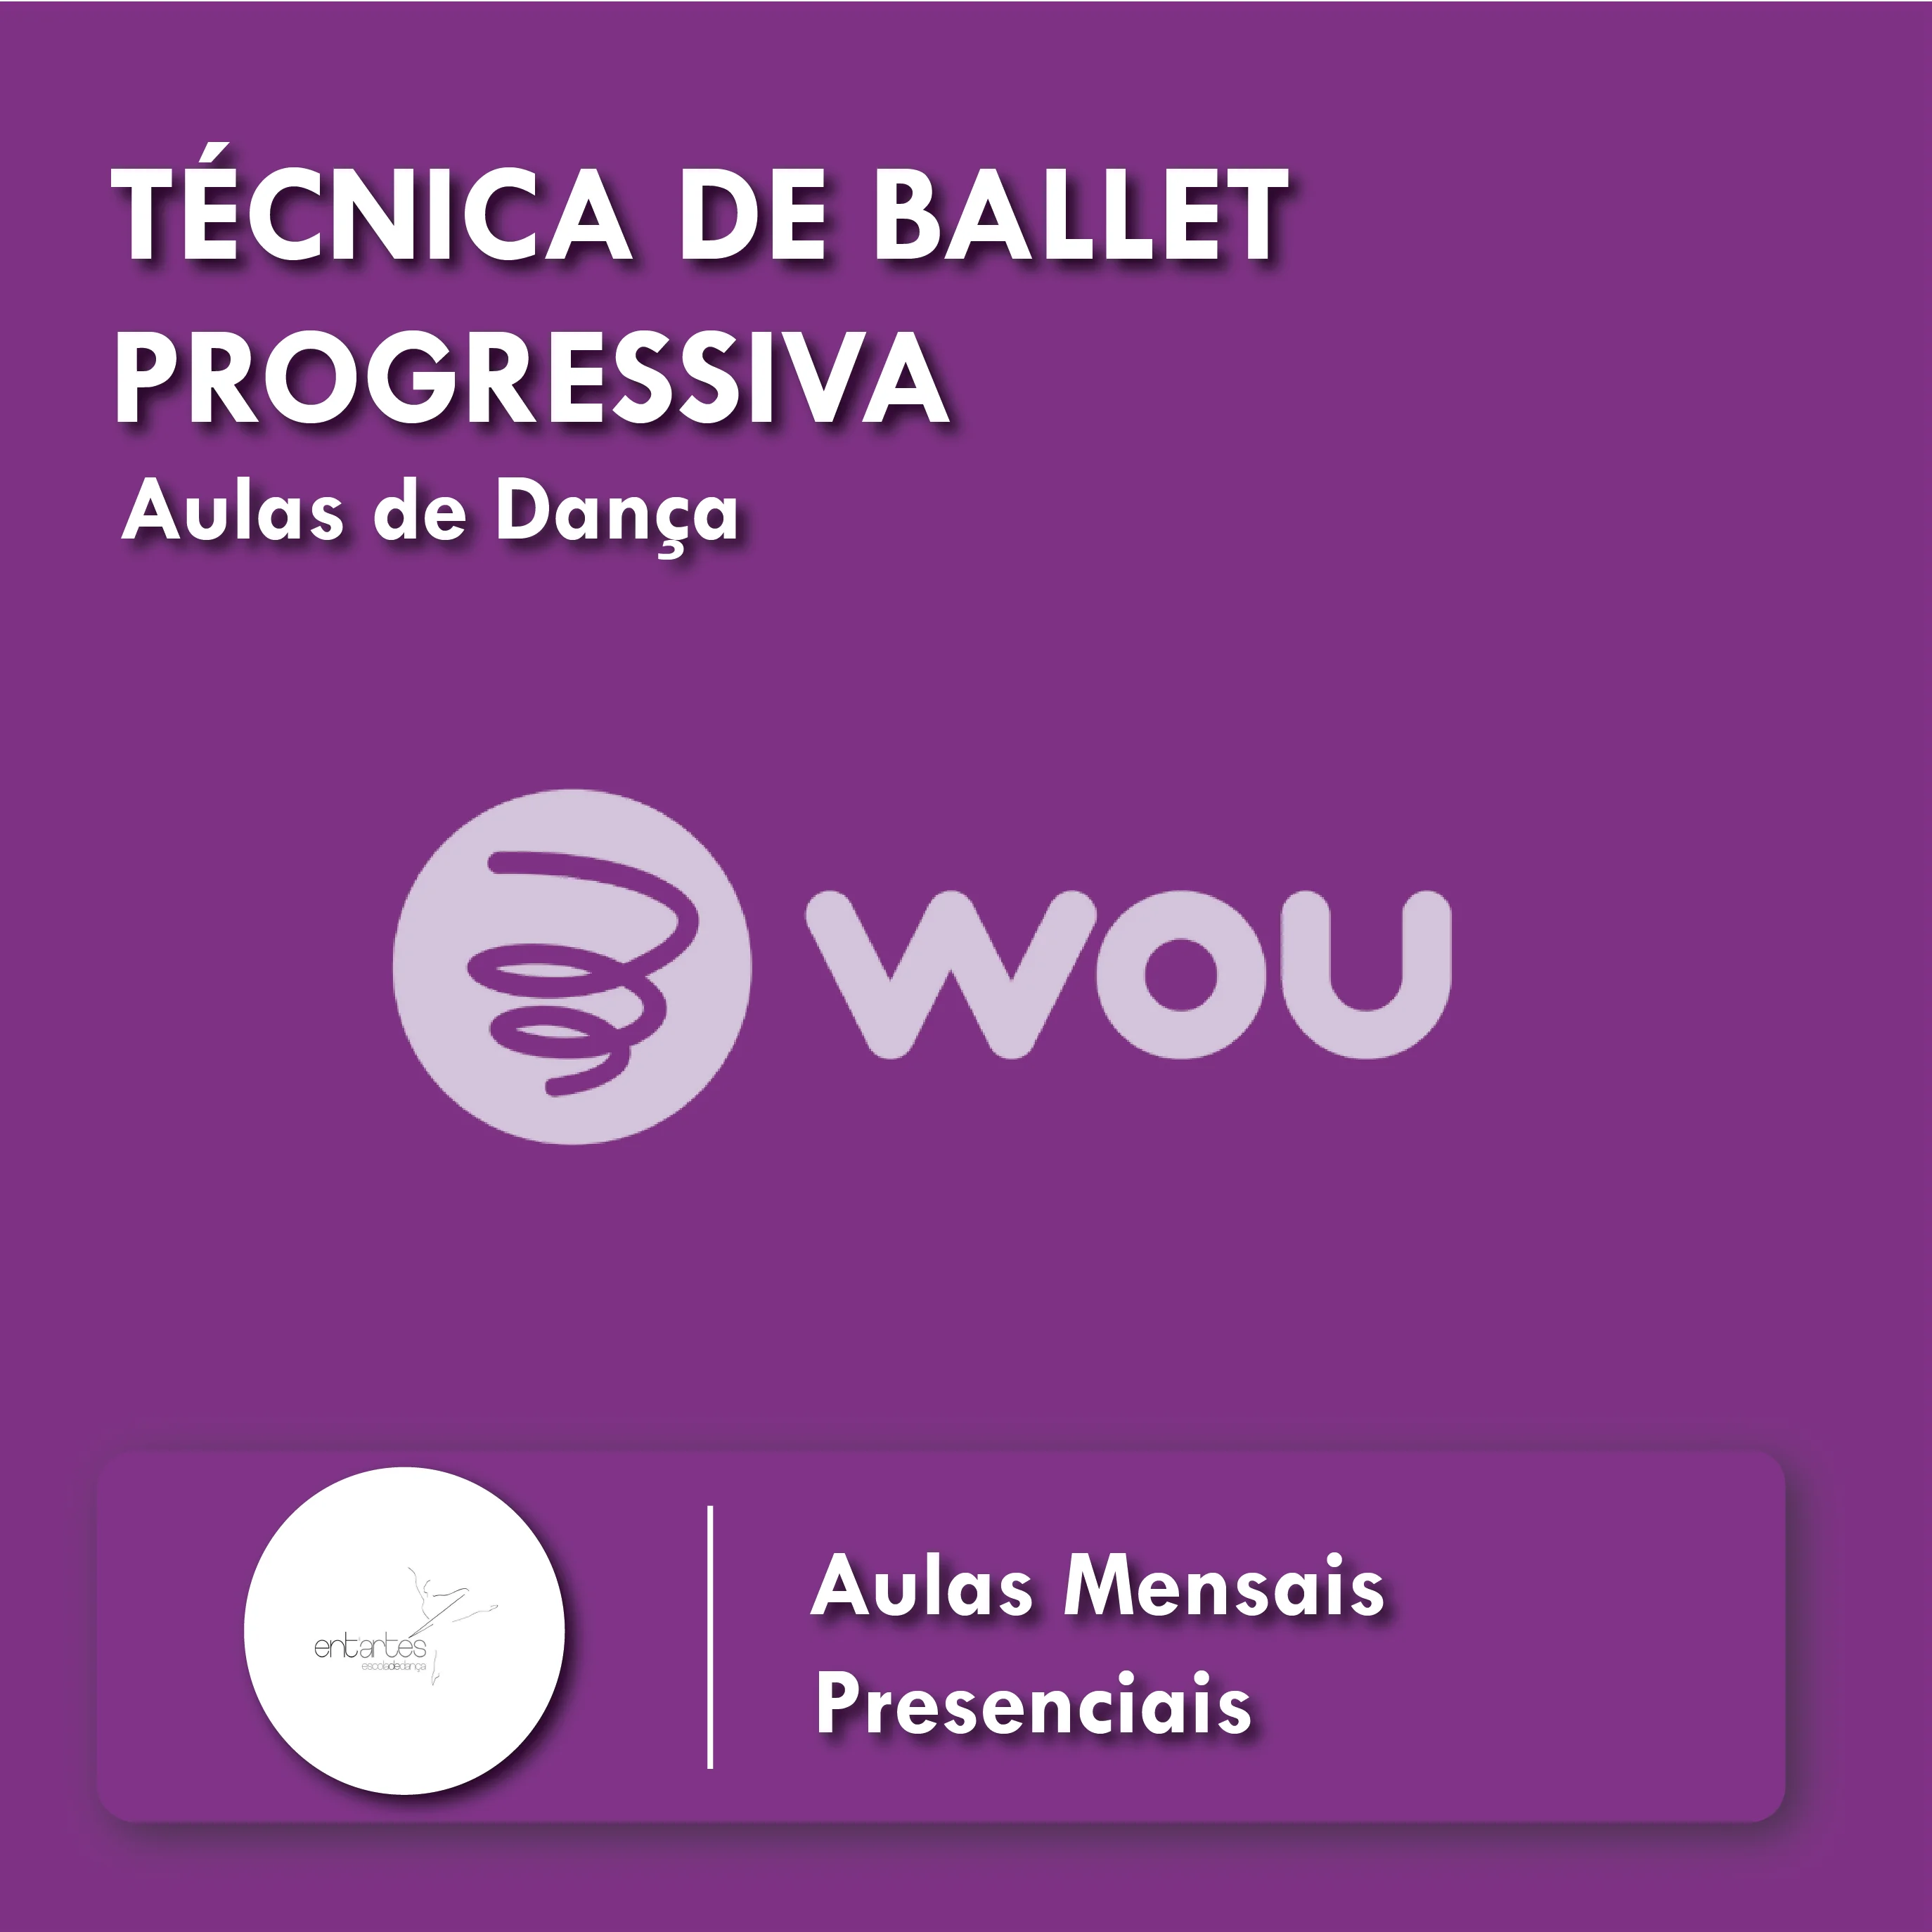 Progressing Ballet Technique Classes in Braga